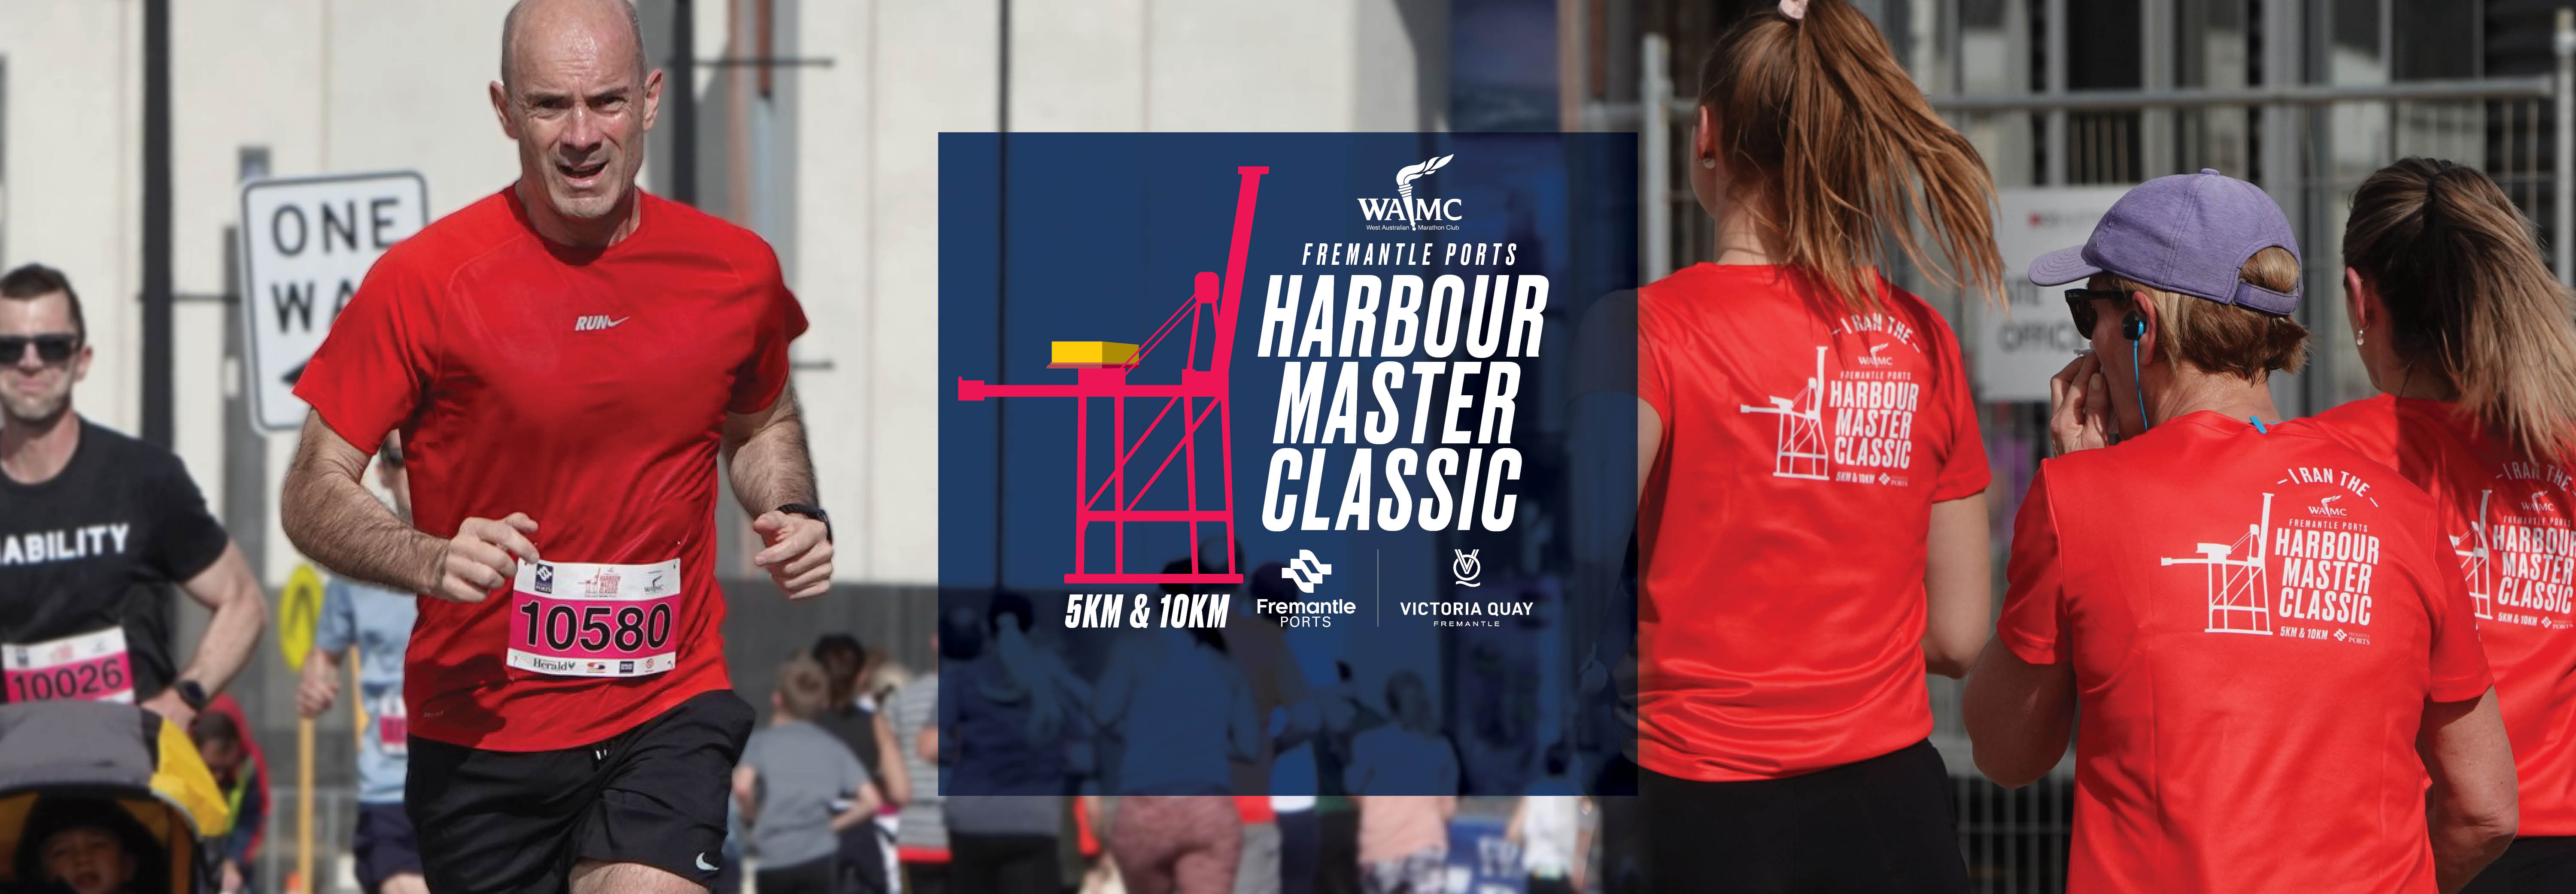 Fremantle Ports Harbour Master Classic Fun Run banner